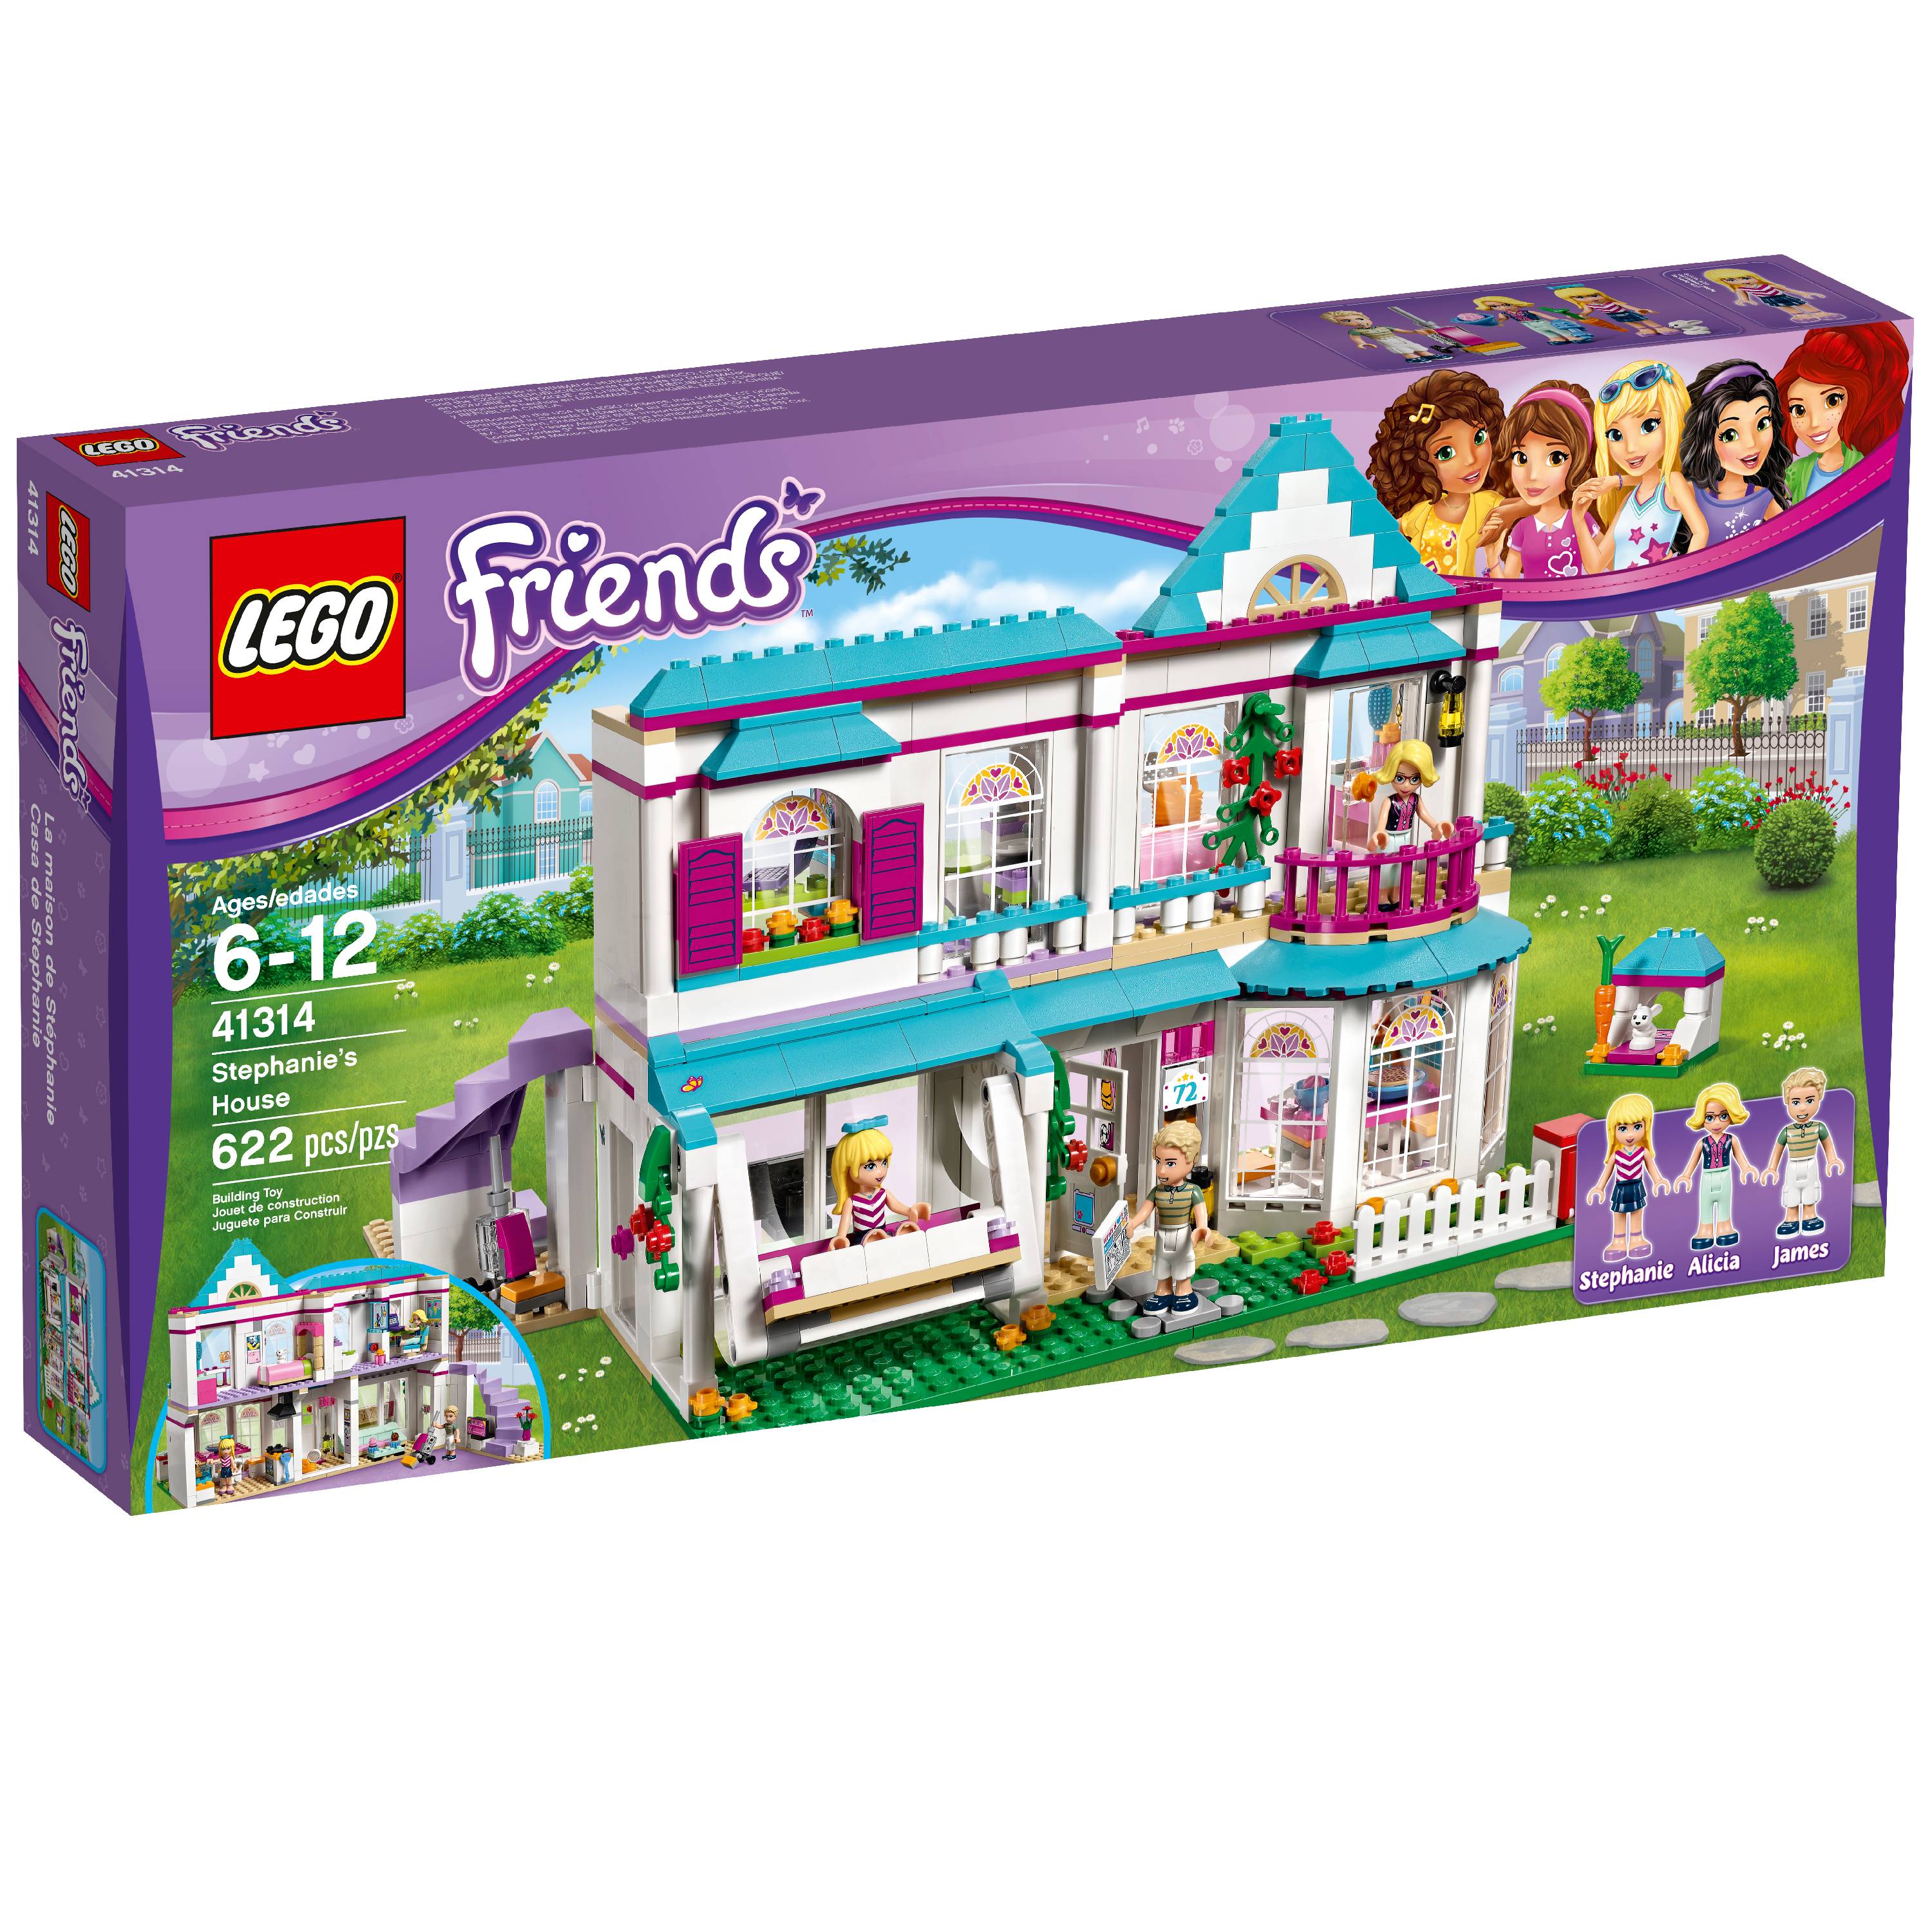 LEGO Friends Stephanie's House 41314 Toy Dollhouse Playset (622 pcs) - image 3 of 6